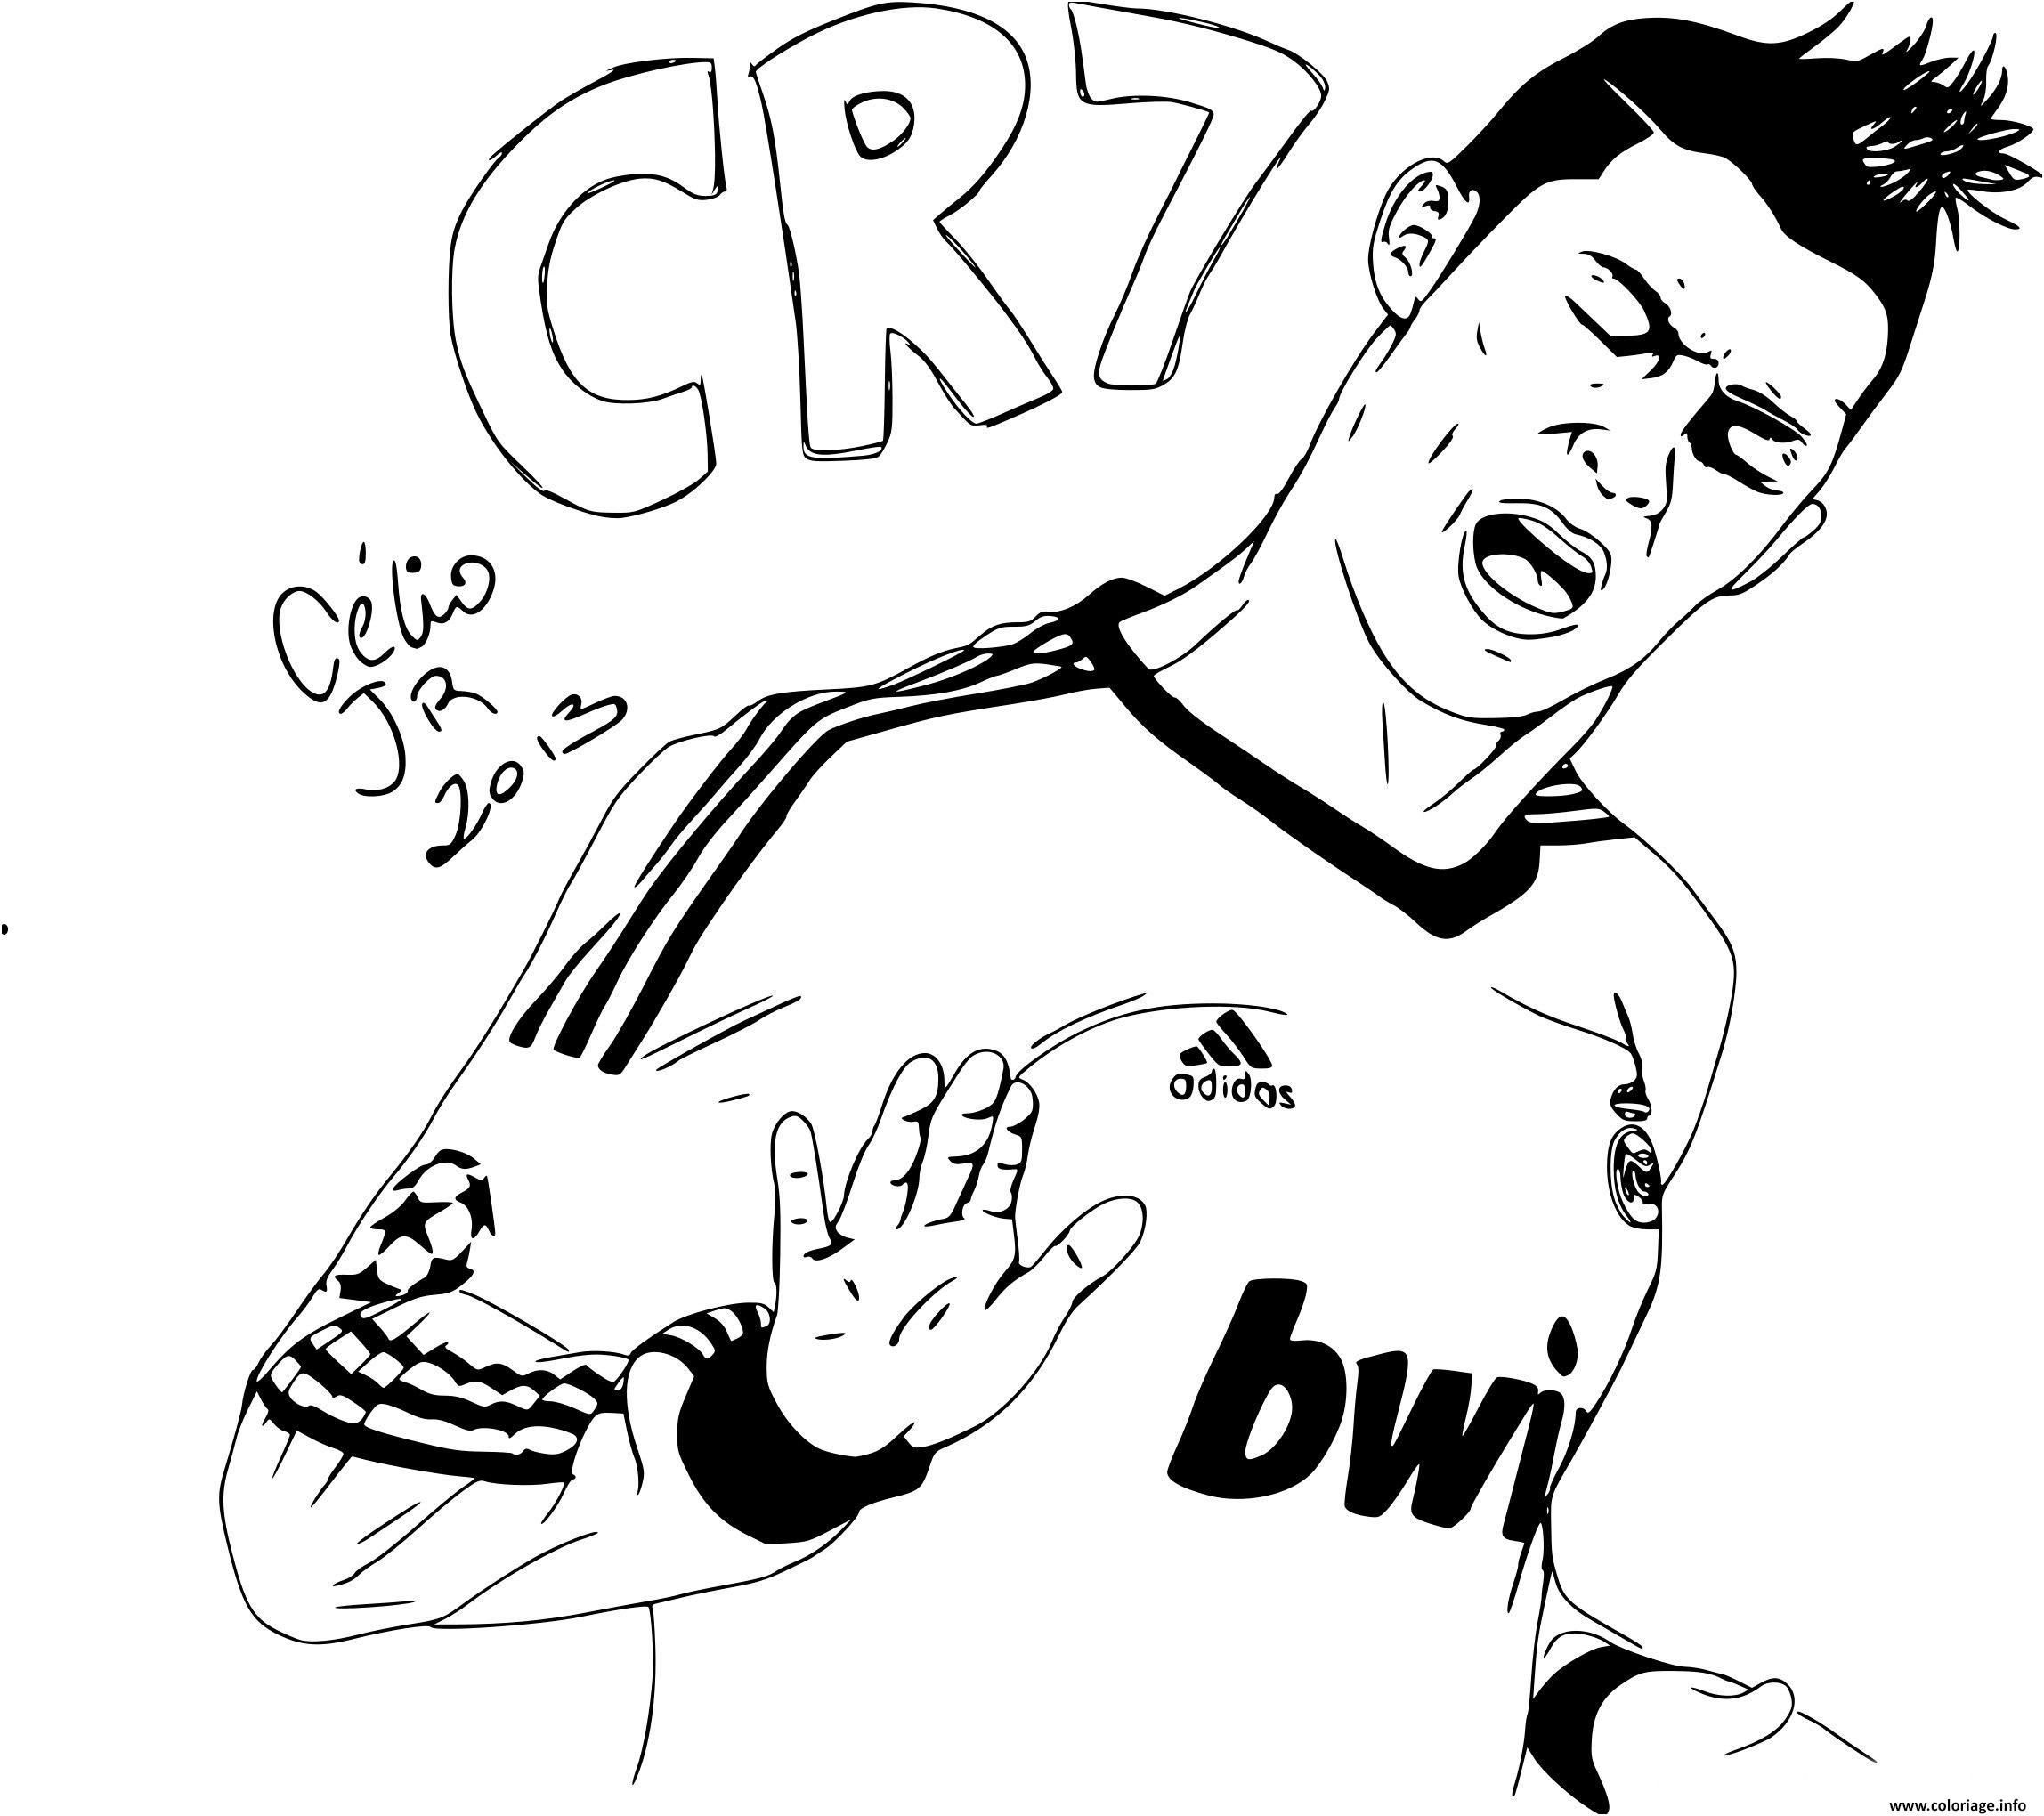 Dessin CR7 Ronaldo Calma Calma Real Madrid Adidas Coloriage Gratuit à Imprimer